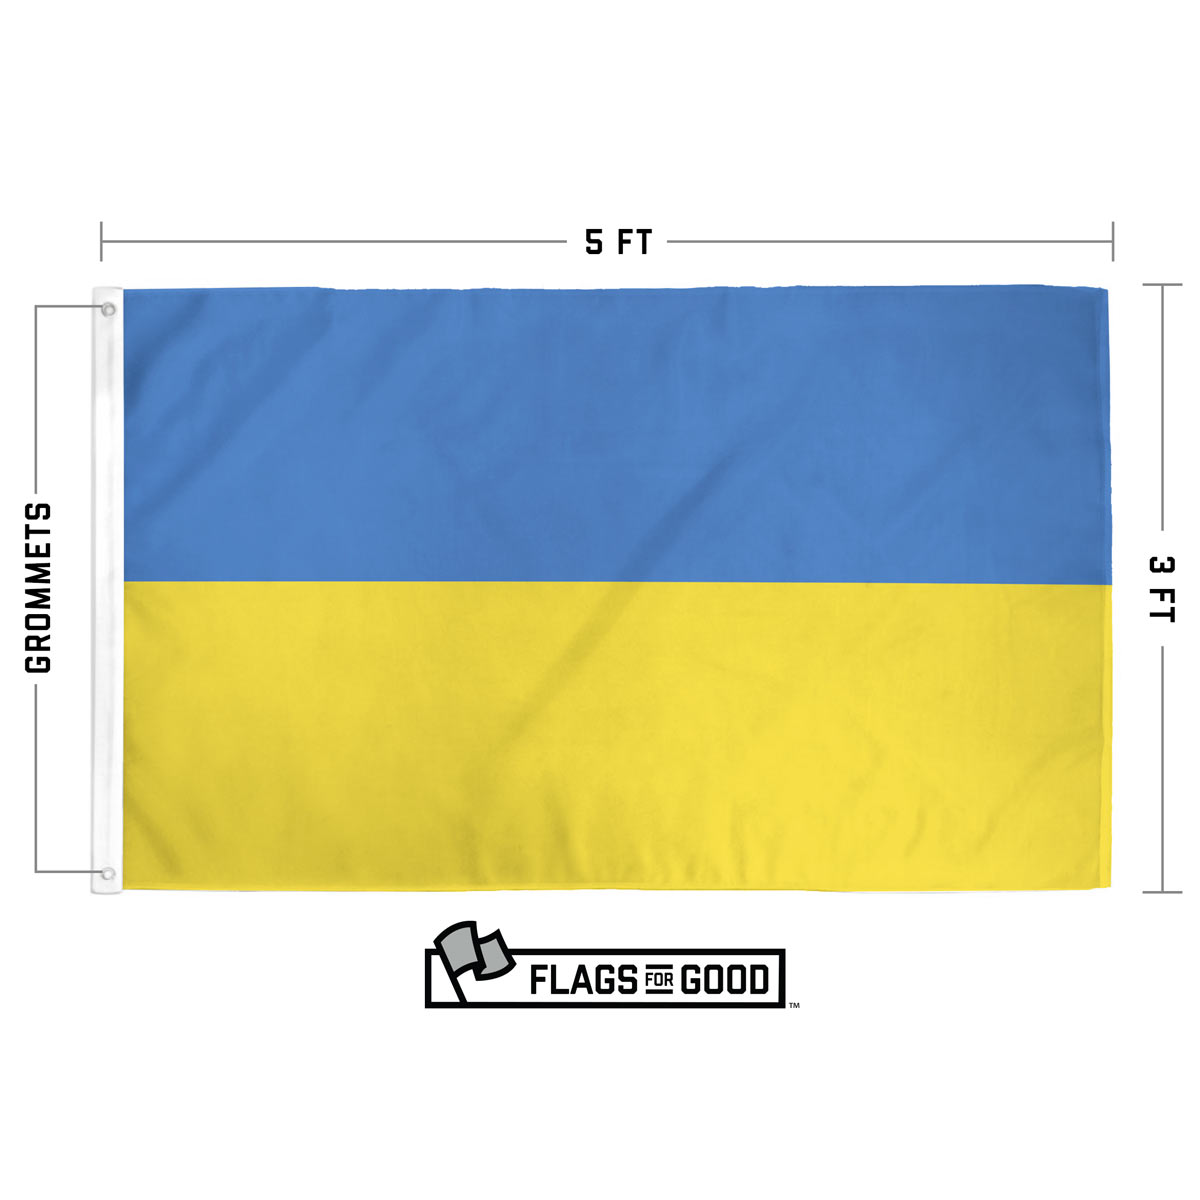 Ukraine Flags Donated to Ukrainian Aid